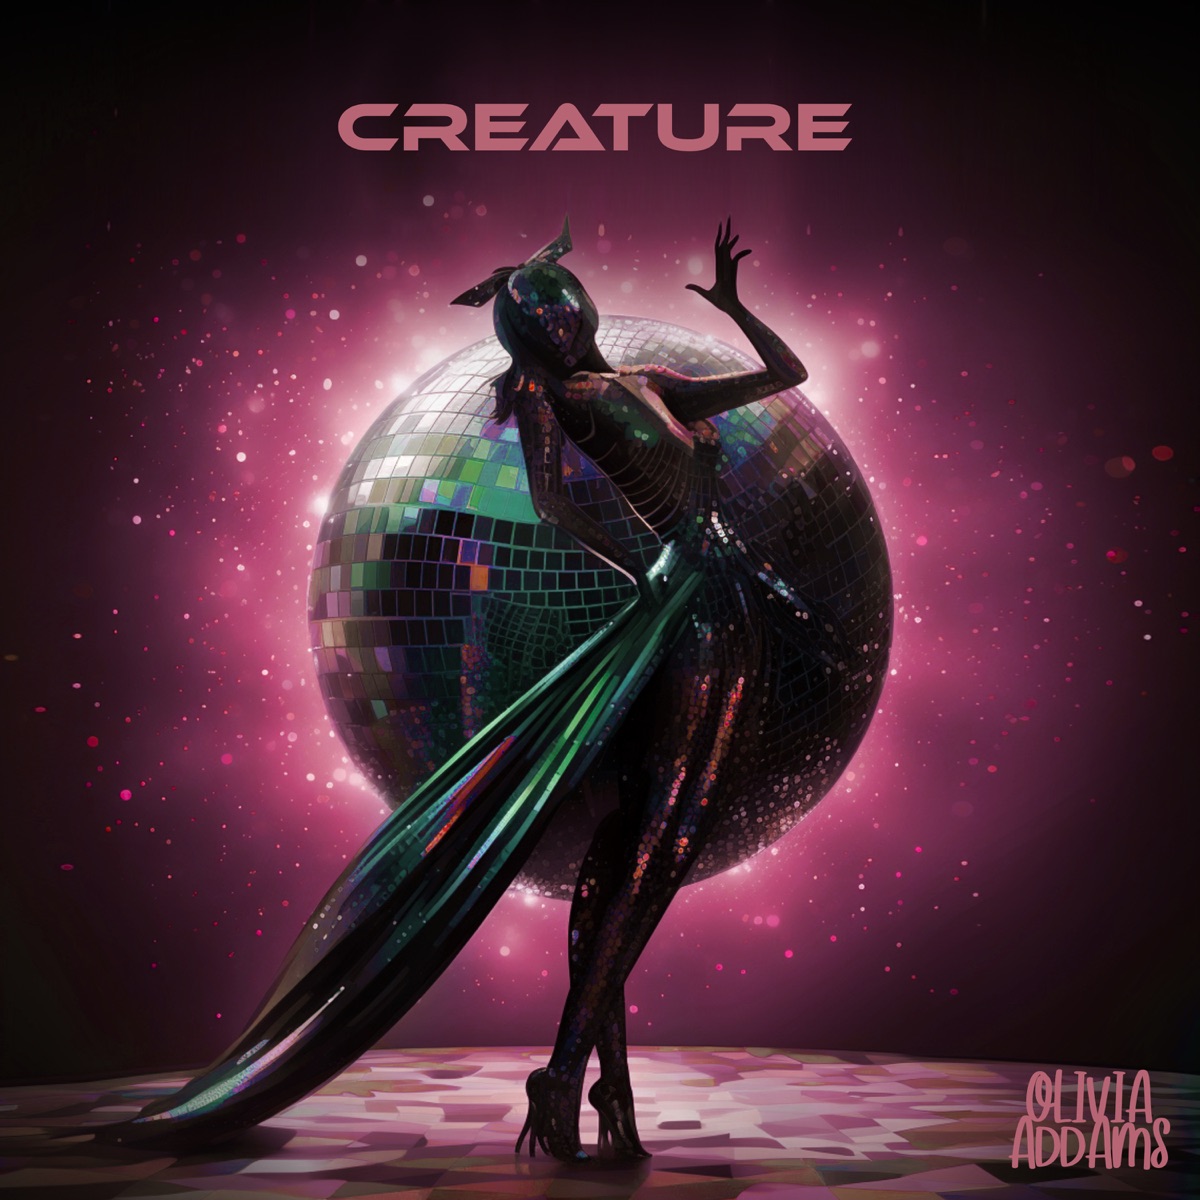 Olivia Addams Creature cover artwork